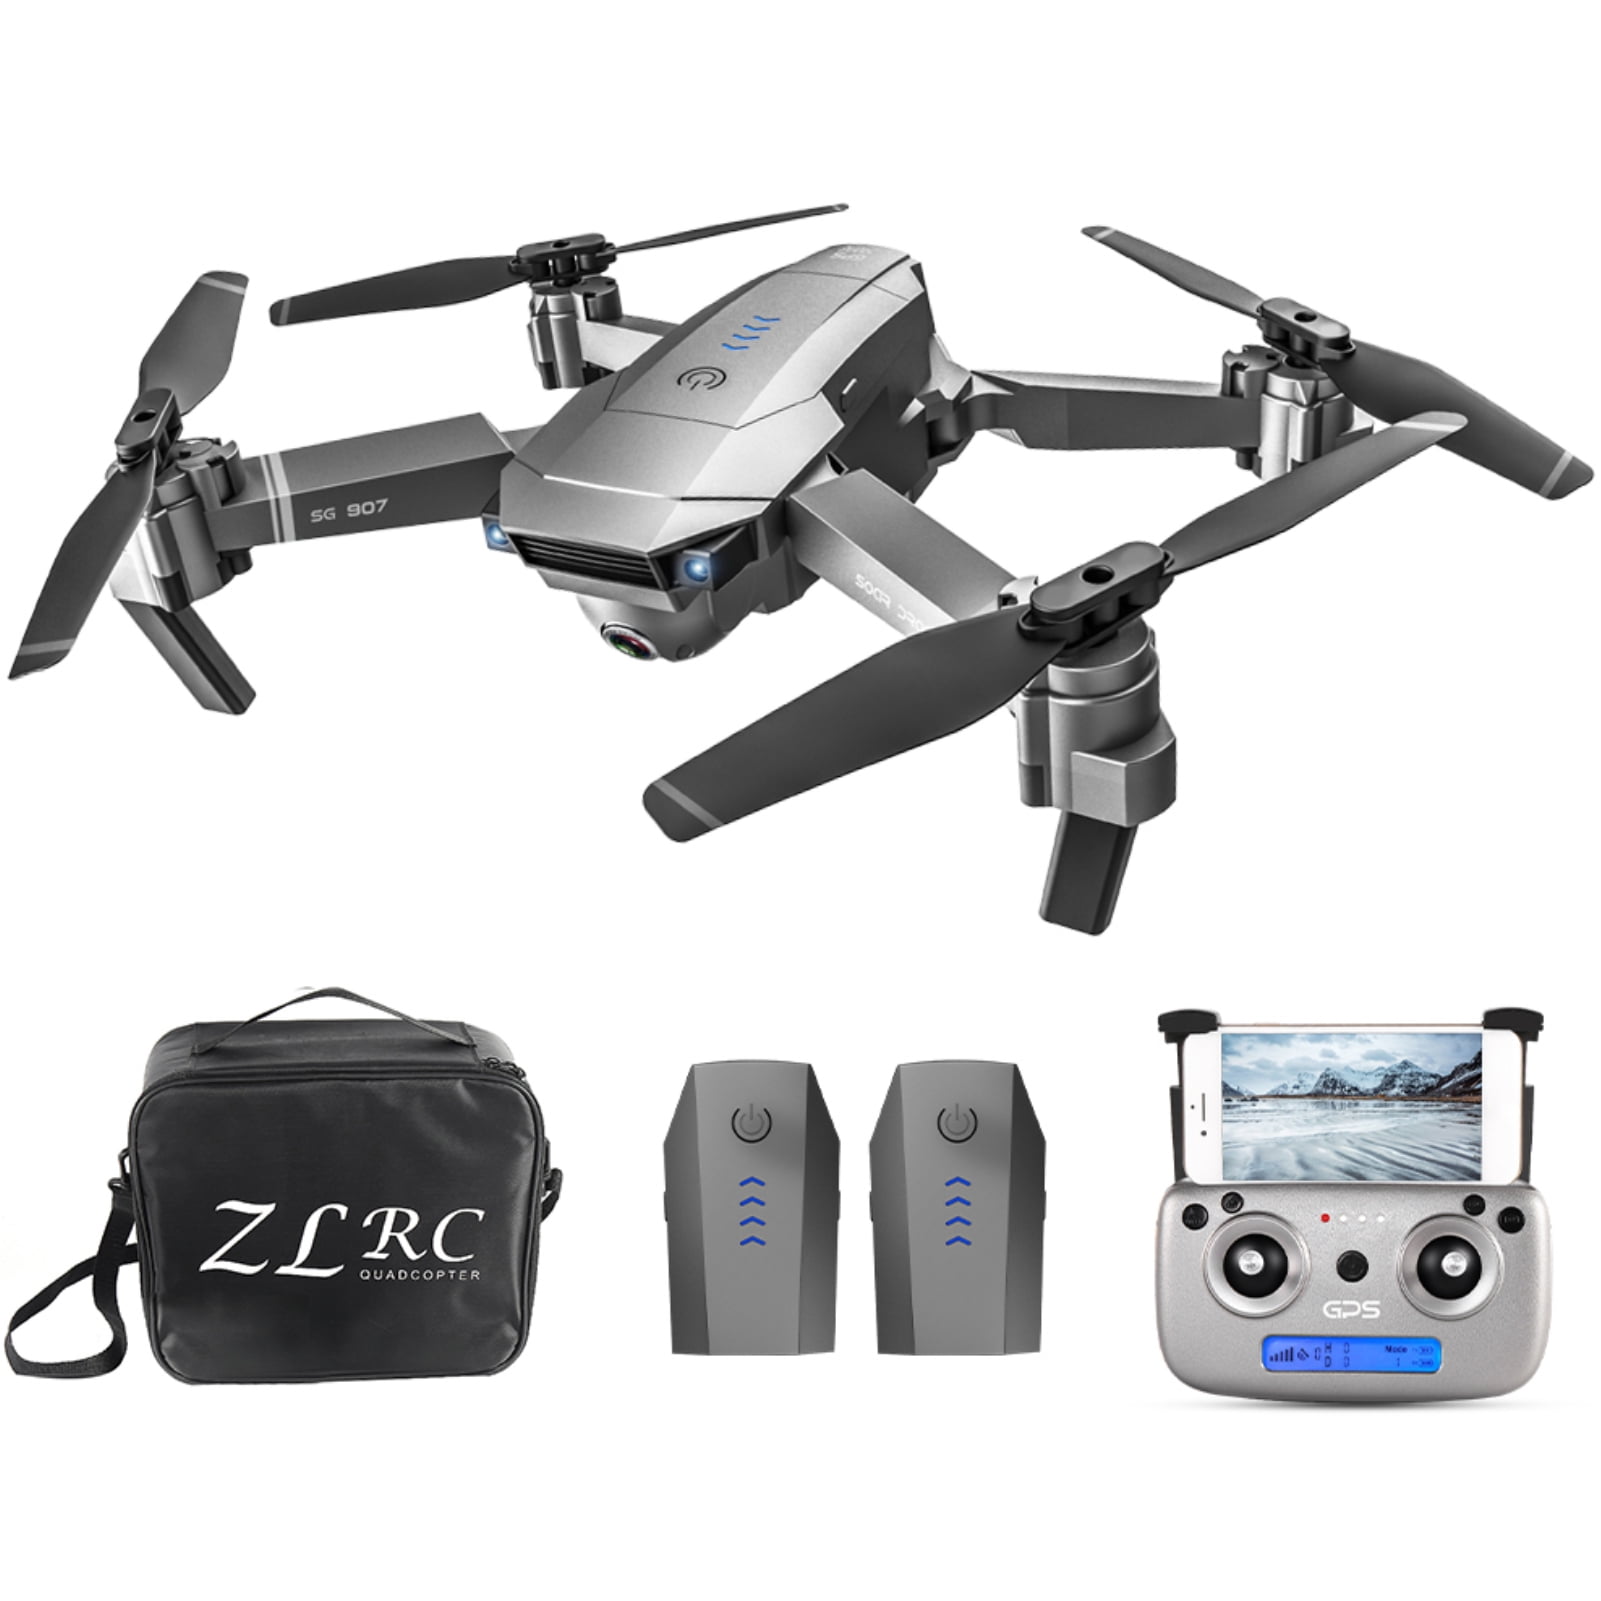 SG907 5G WIFI 4K RC Drone With Dual Camera GPS Quadcopter Remote Control US SHIP 